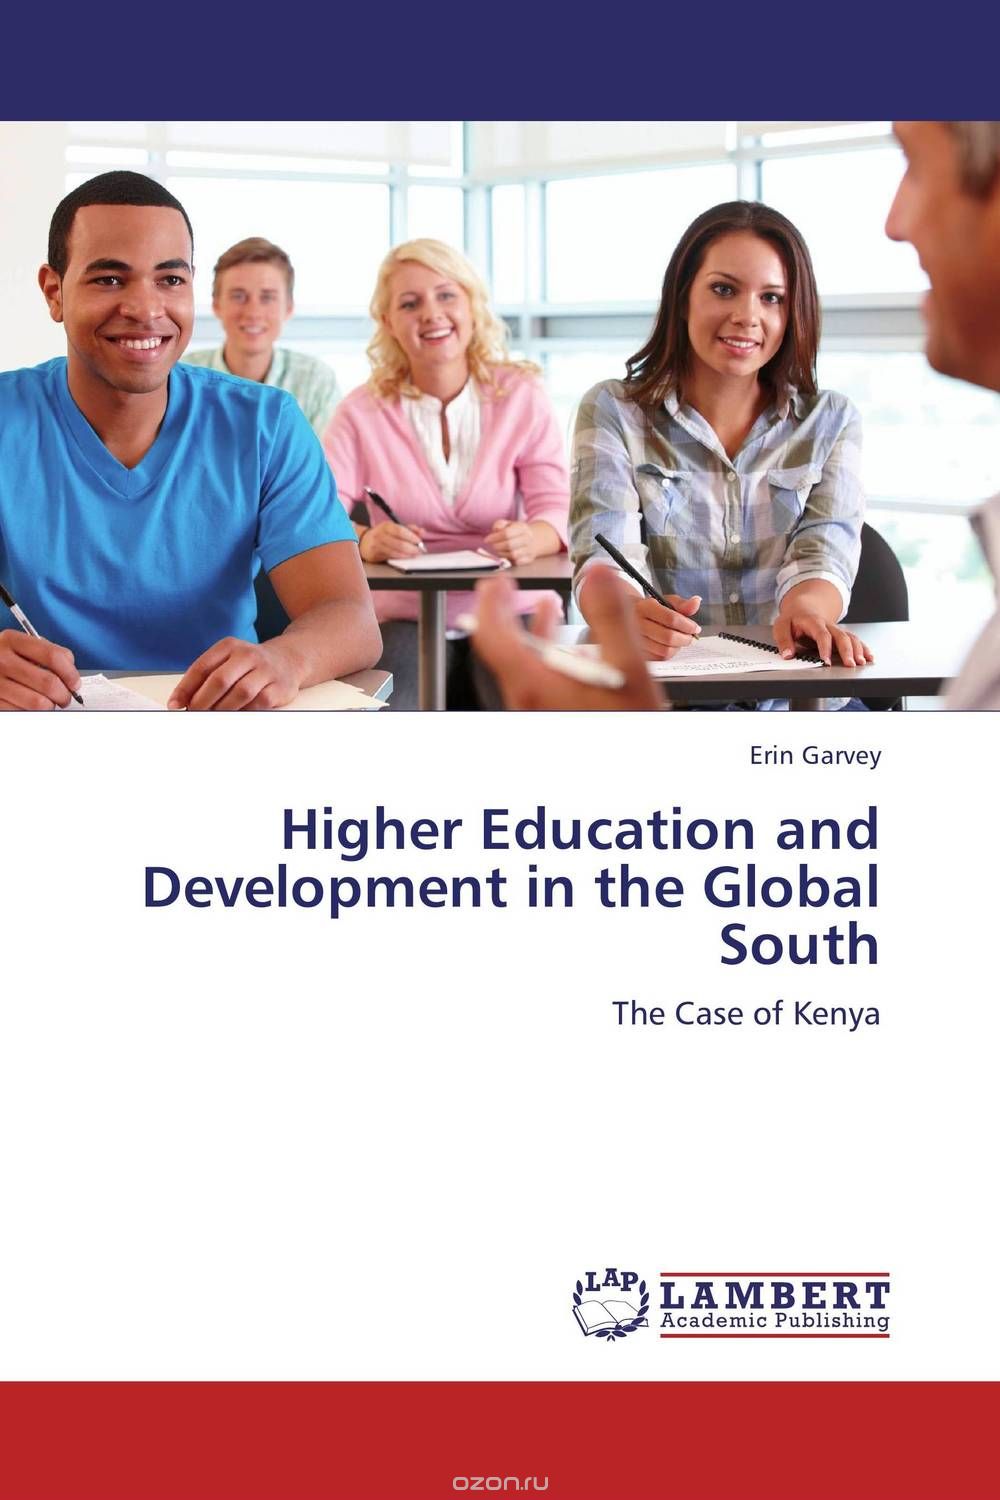 Скачать книгу "Higher Education and Development in the Global South"